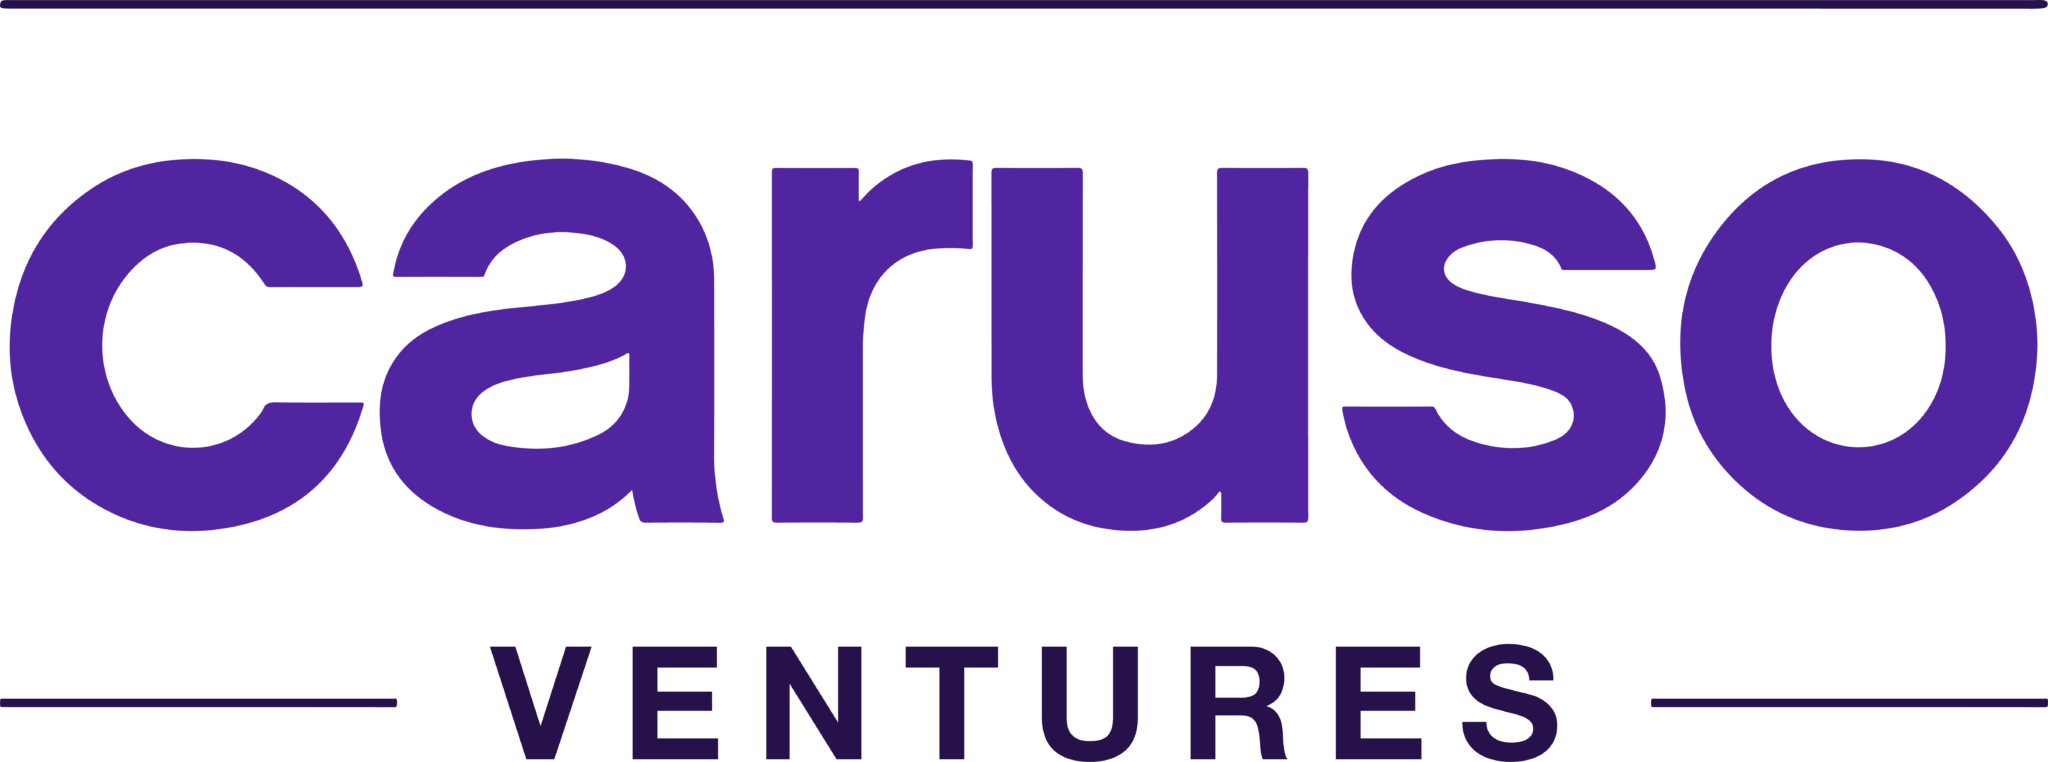 Caruso Ventures Purple